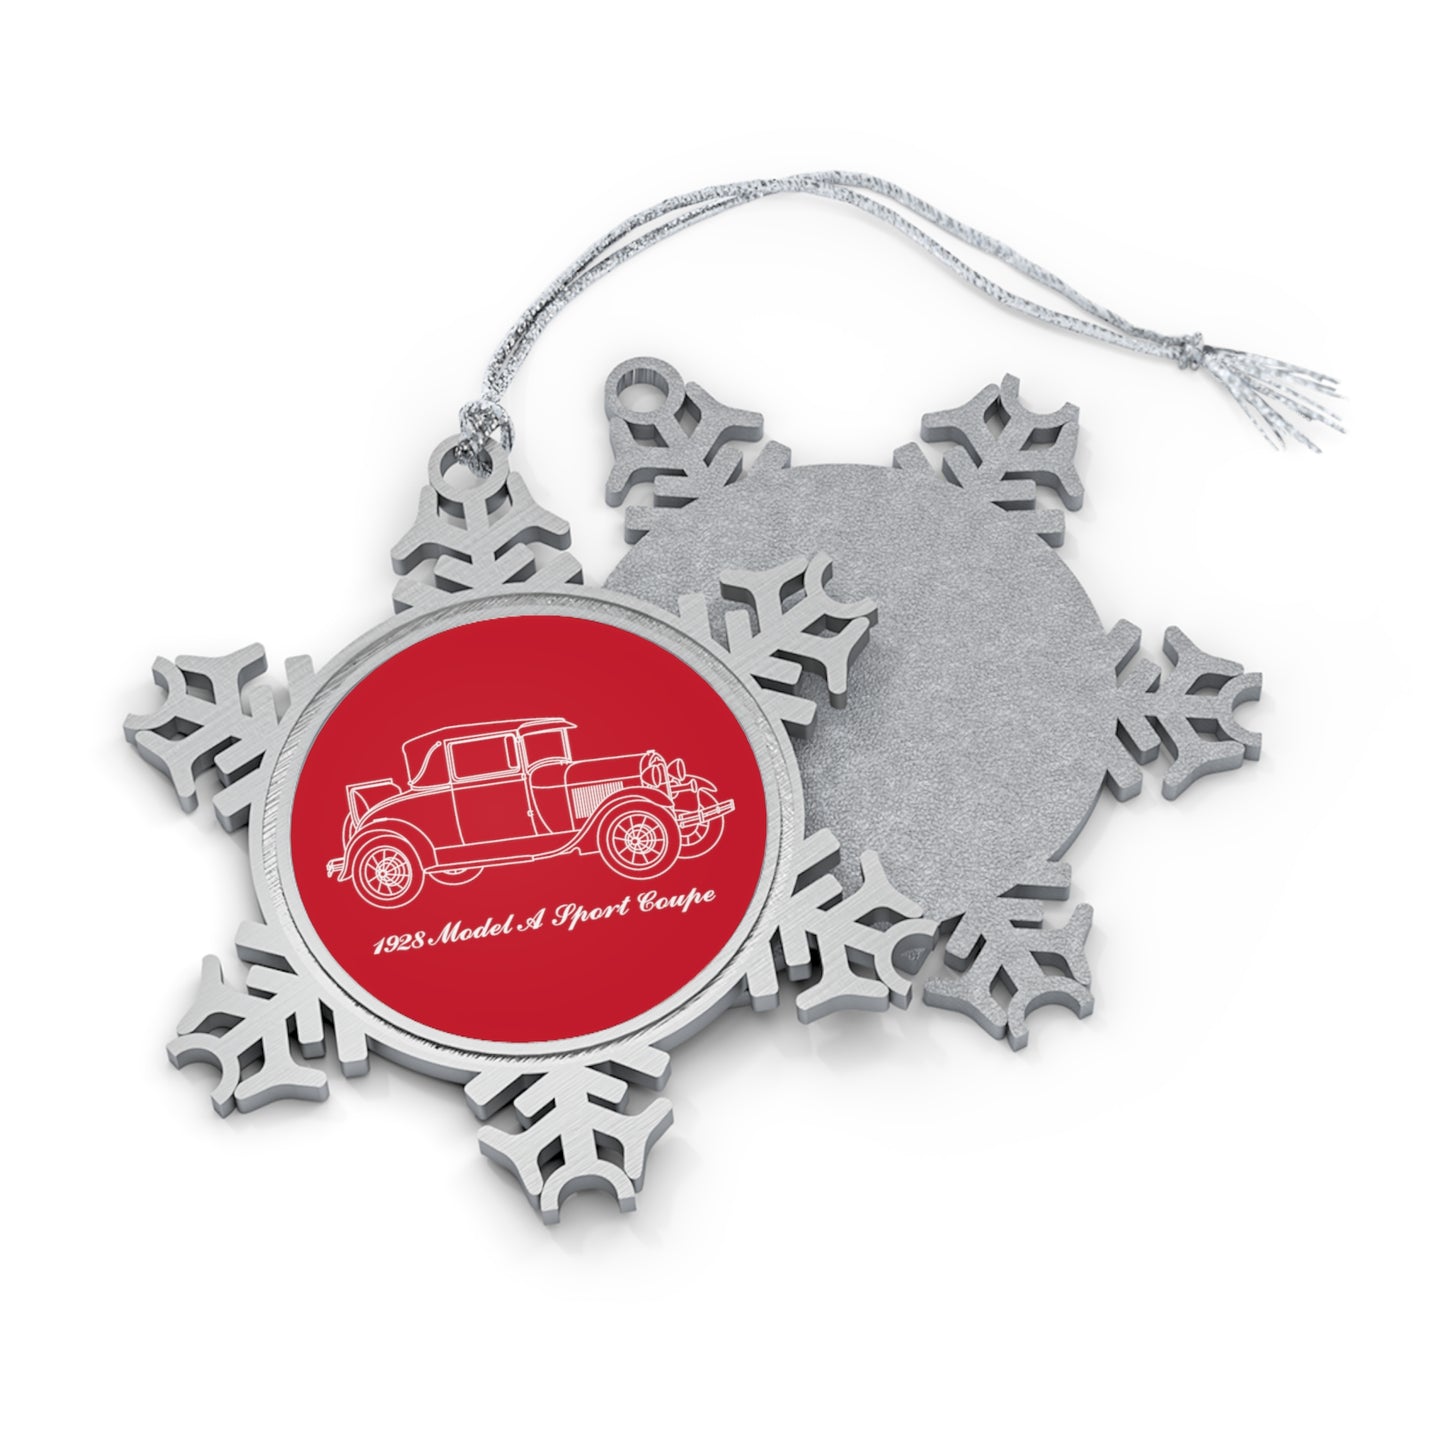 1928 Sport Coupe Snowflake Ornament